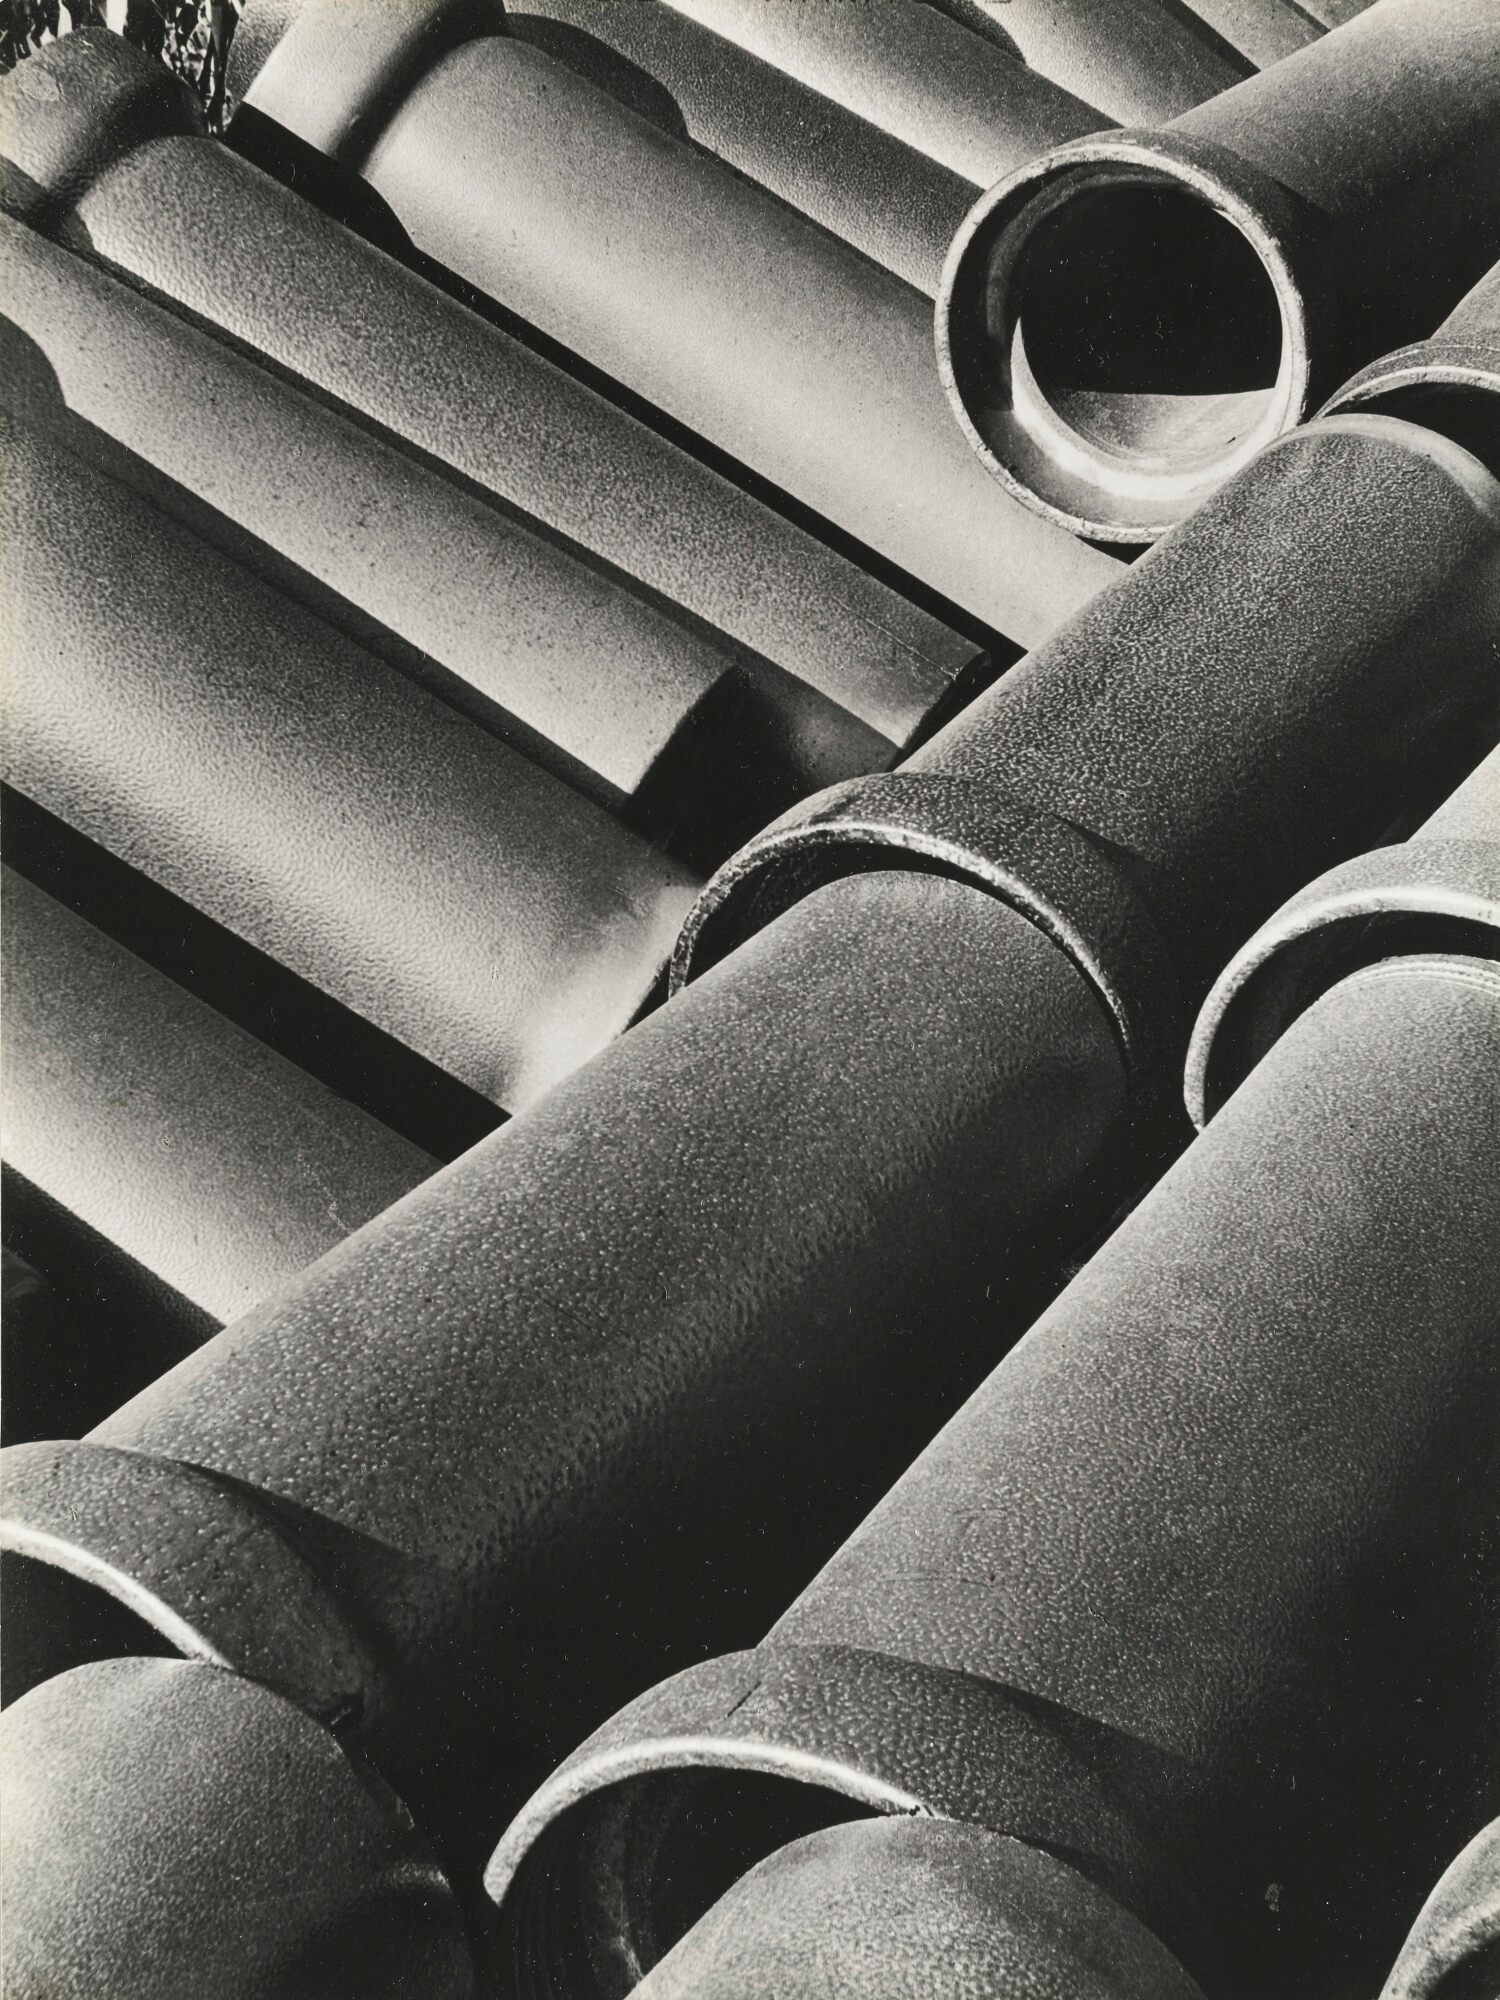 Канализационные трубы, 1929. Фотограф Бретт Уэстон